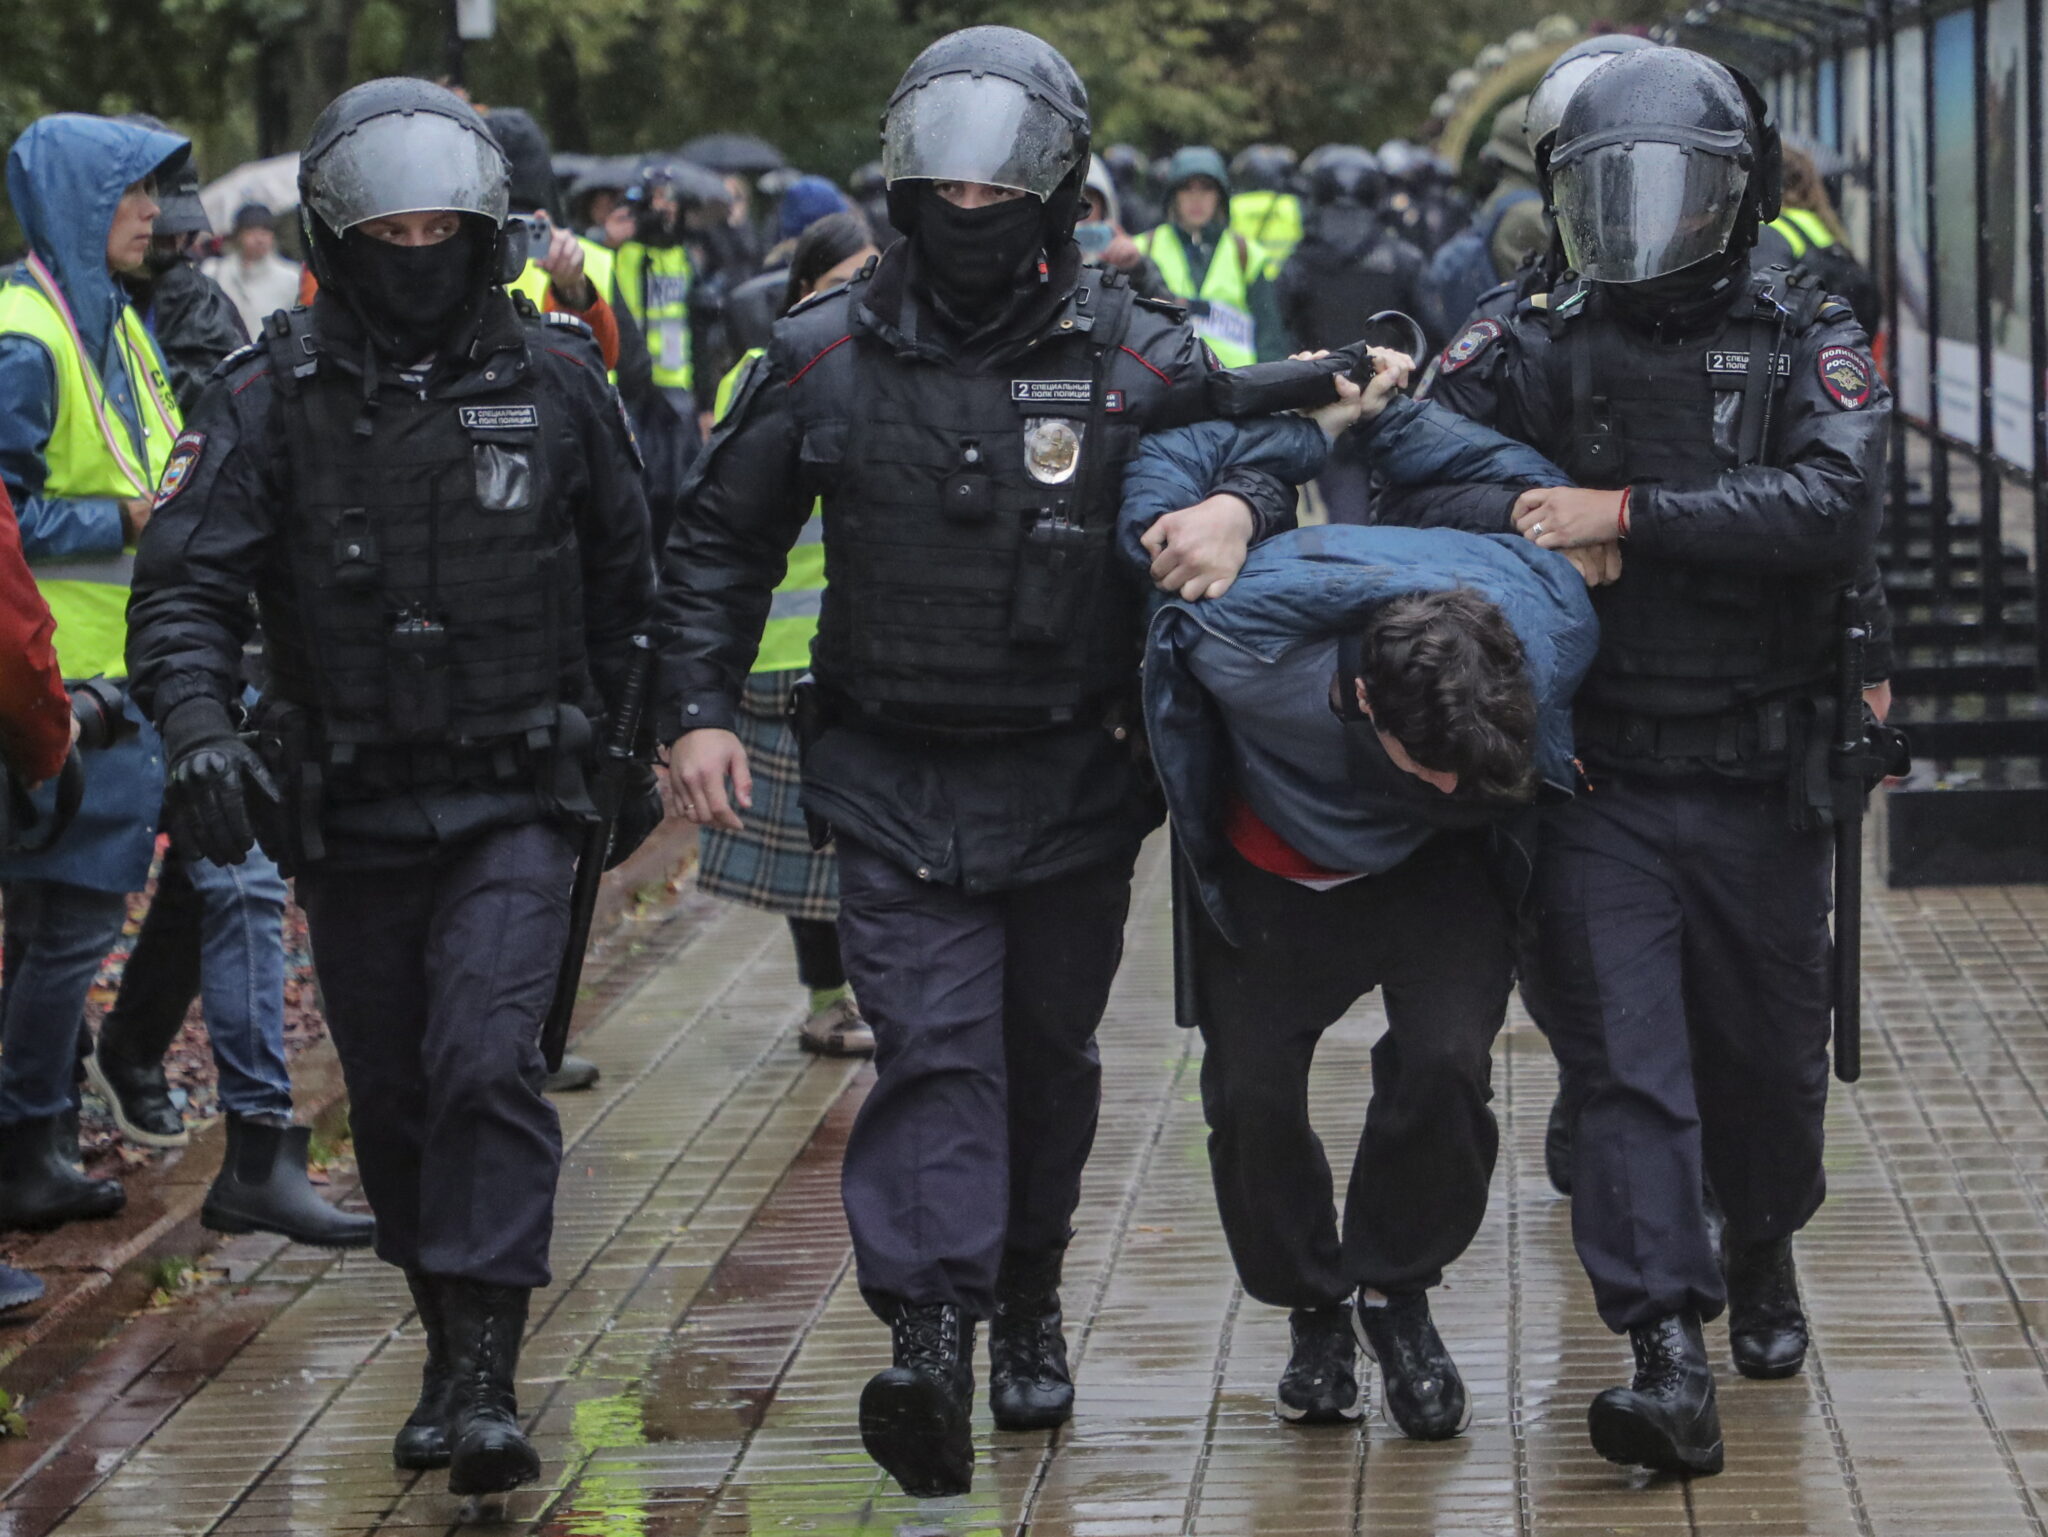 Фото для иллюстрации. Полиция задерживает участника протеста против мобилизации в РФ. Фото EPA/MAXIM SHIPENKOV